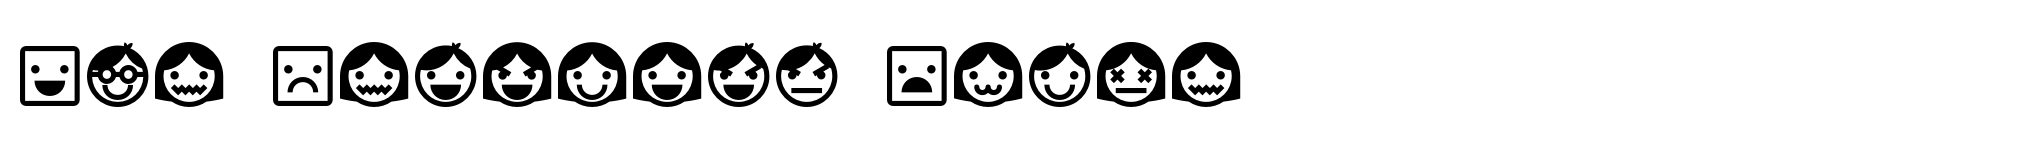 Ayi Dingbats Emoji image